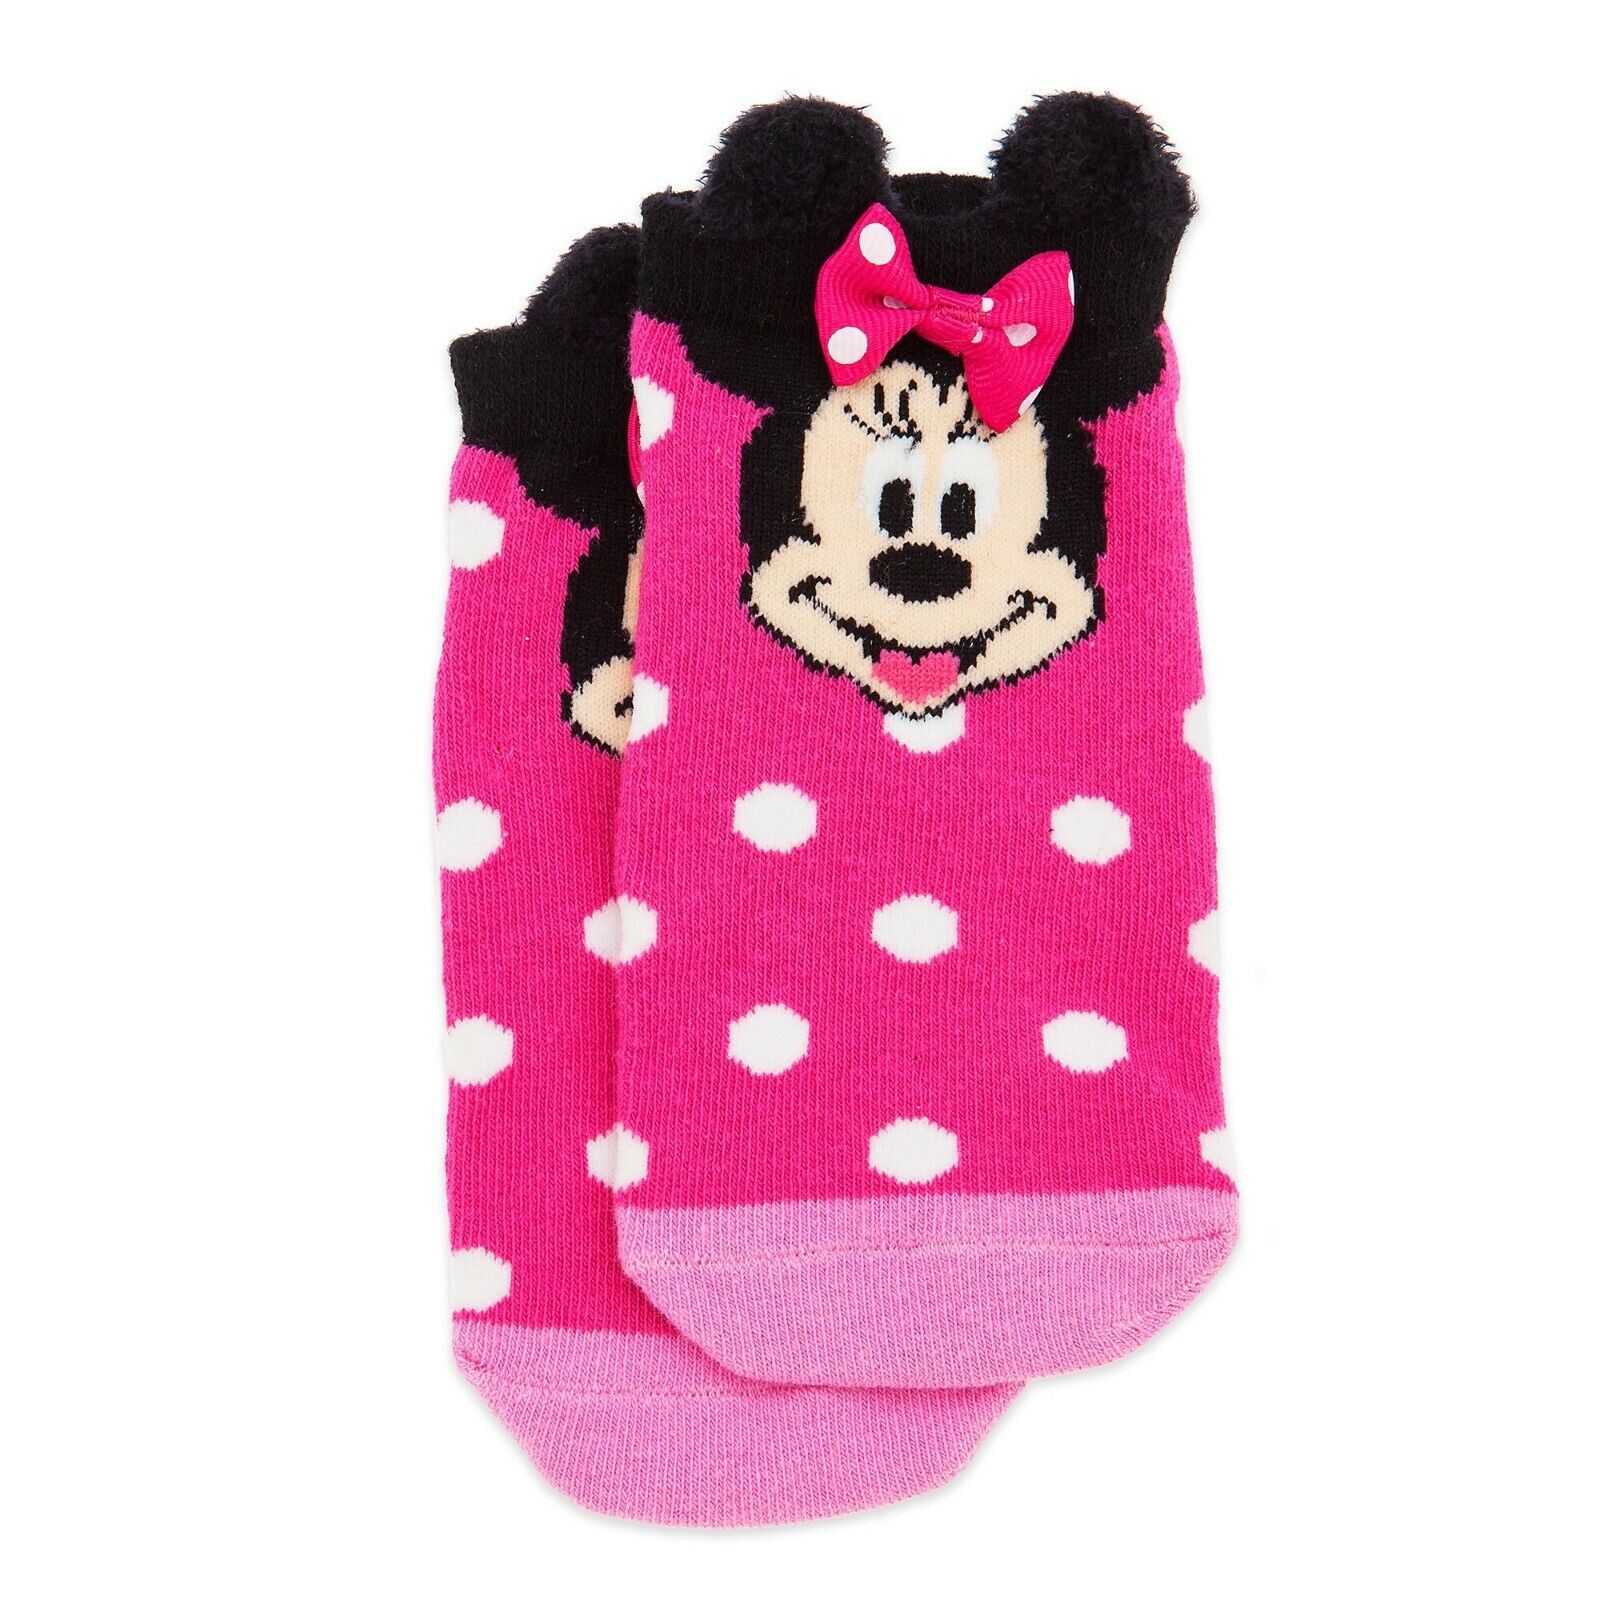 Disney Store Minnie Mouse Pink Polka Dot Ankle Socks Kids Girls Size S M L NWT